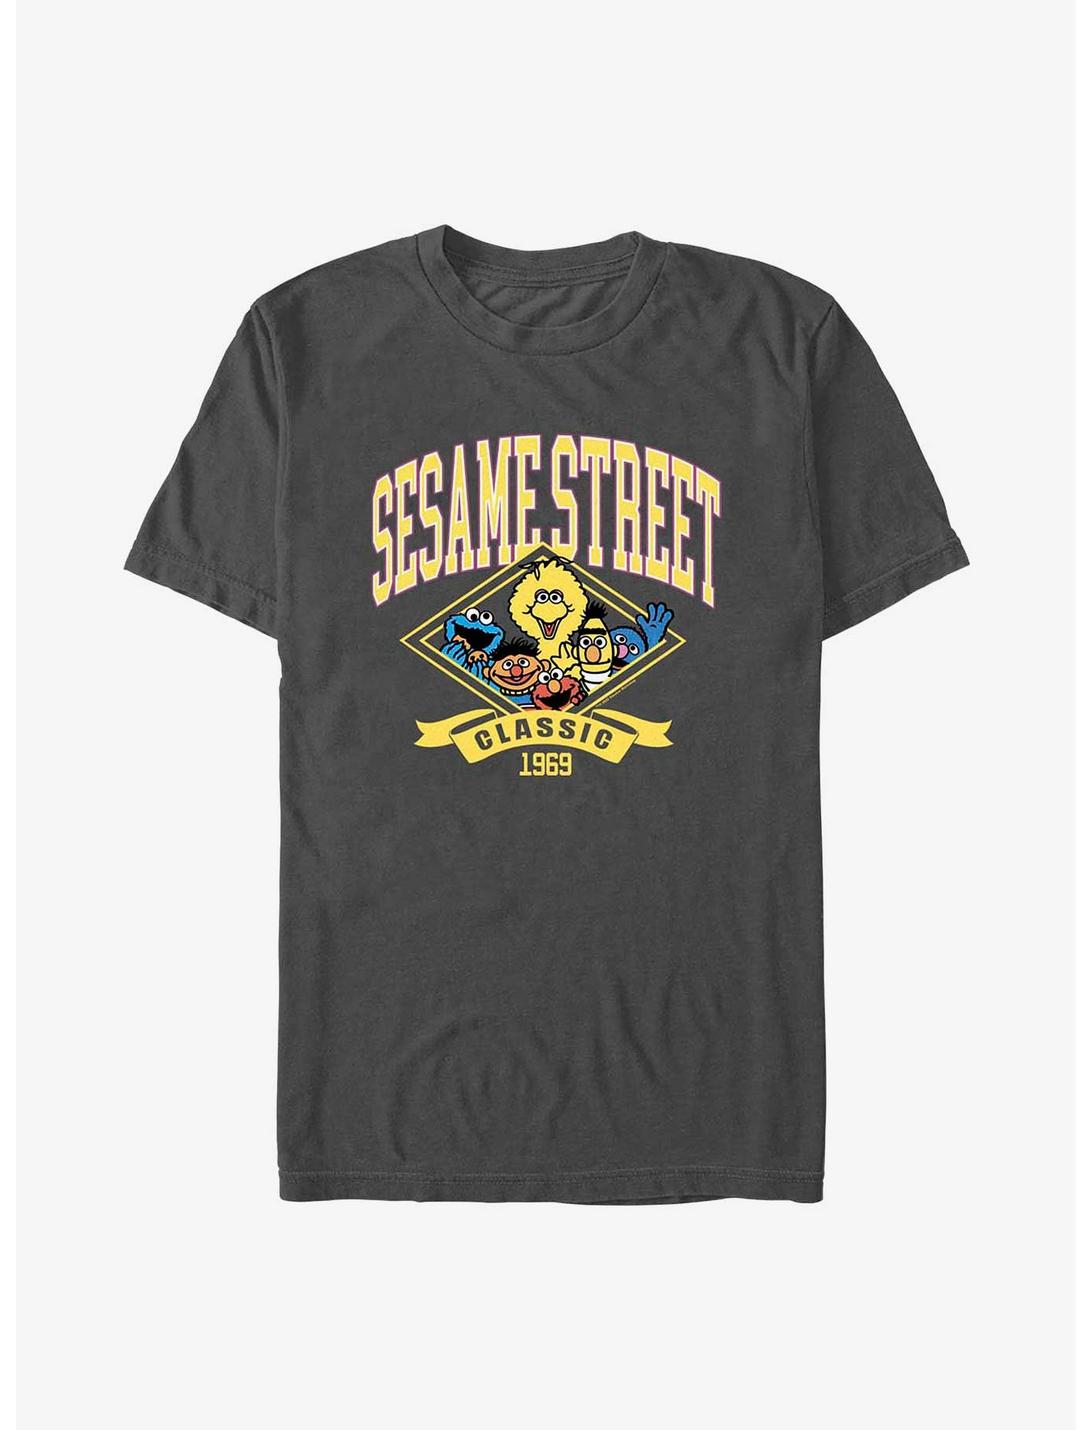 Sesame Street Classic 1969 T-Shirt, CHARCOAL, hi-res